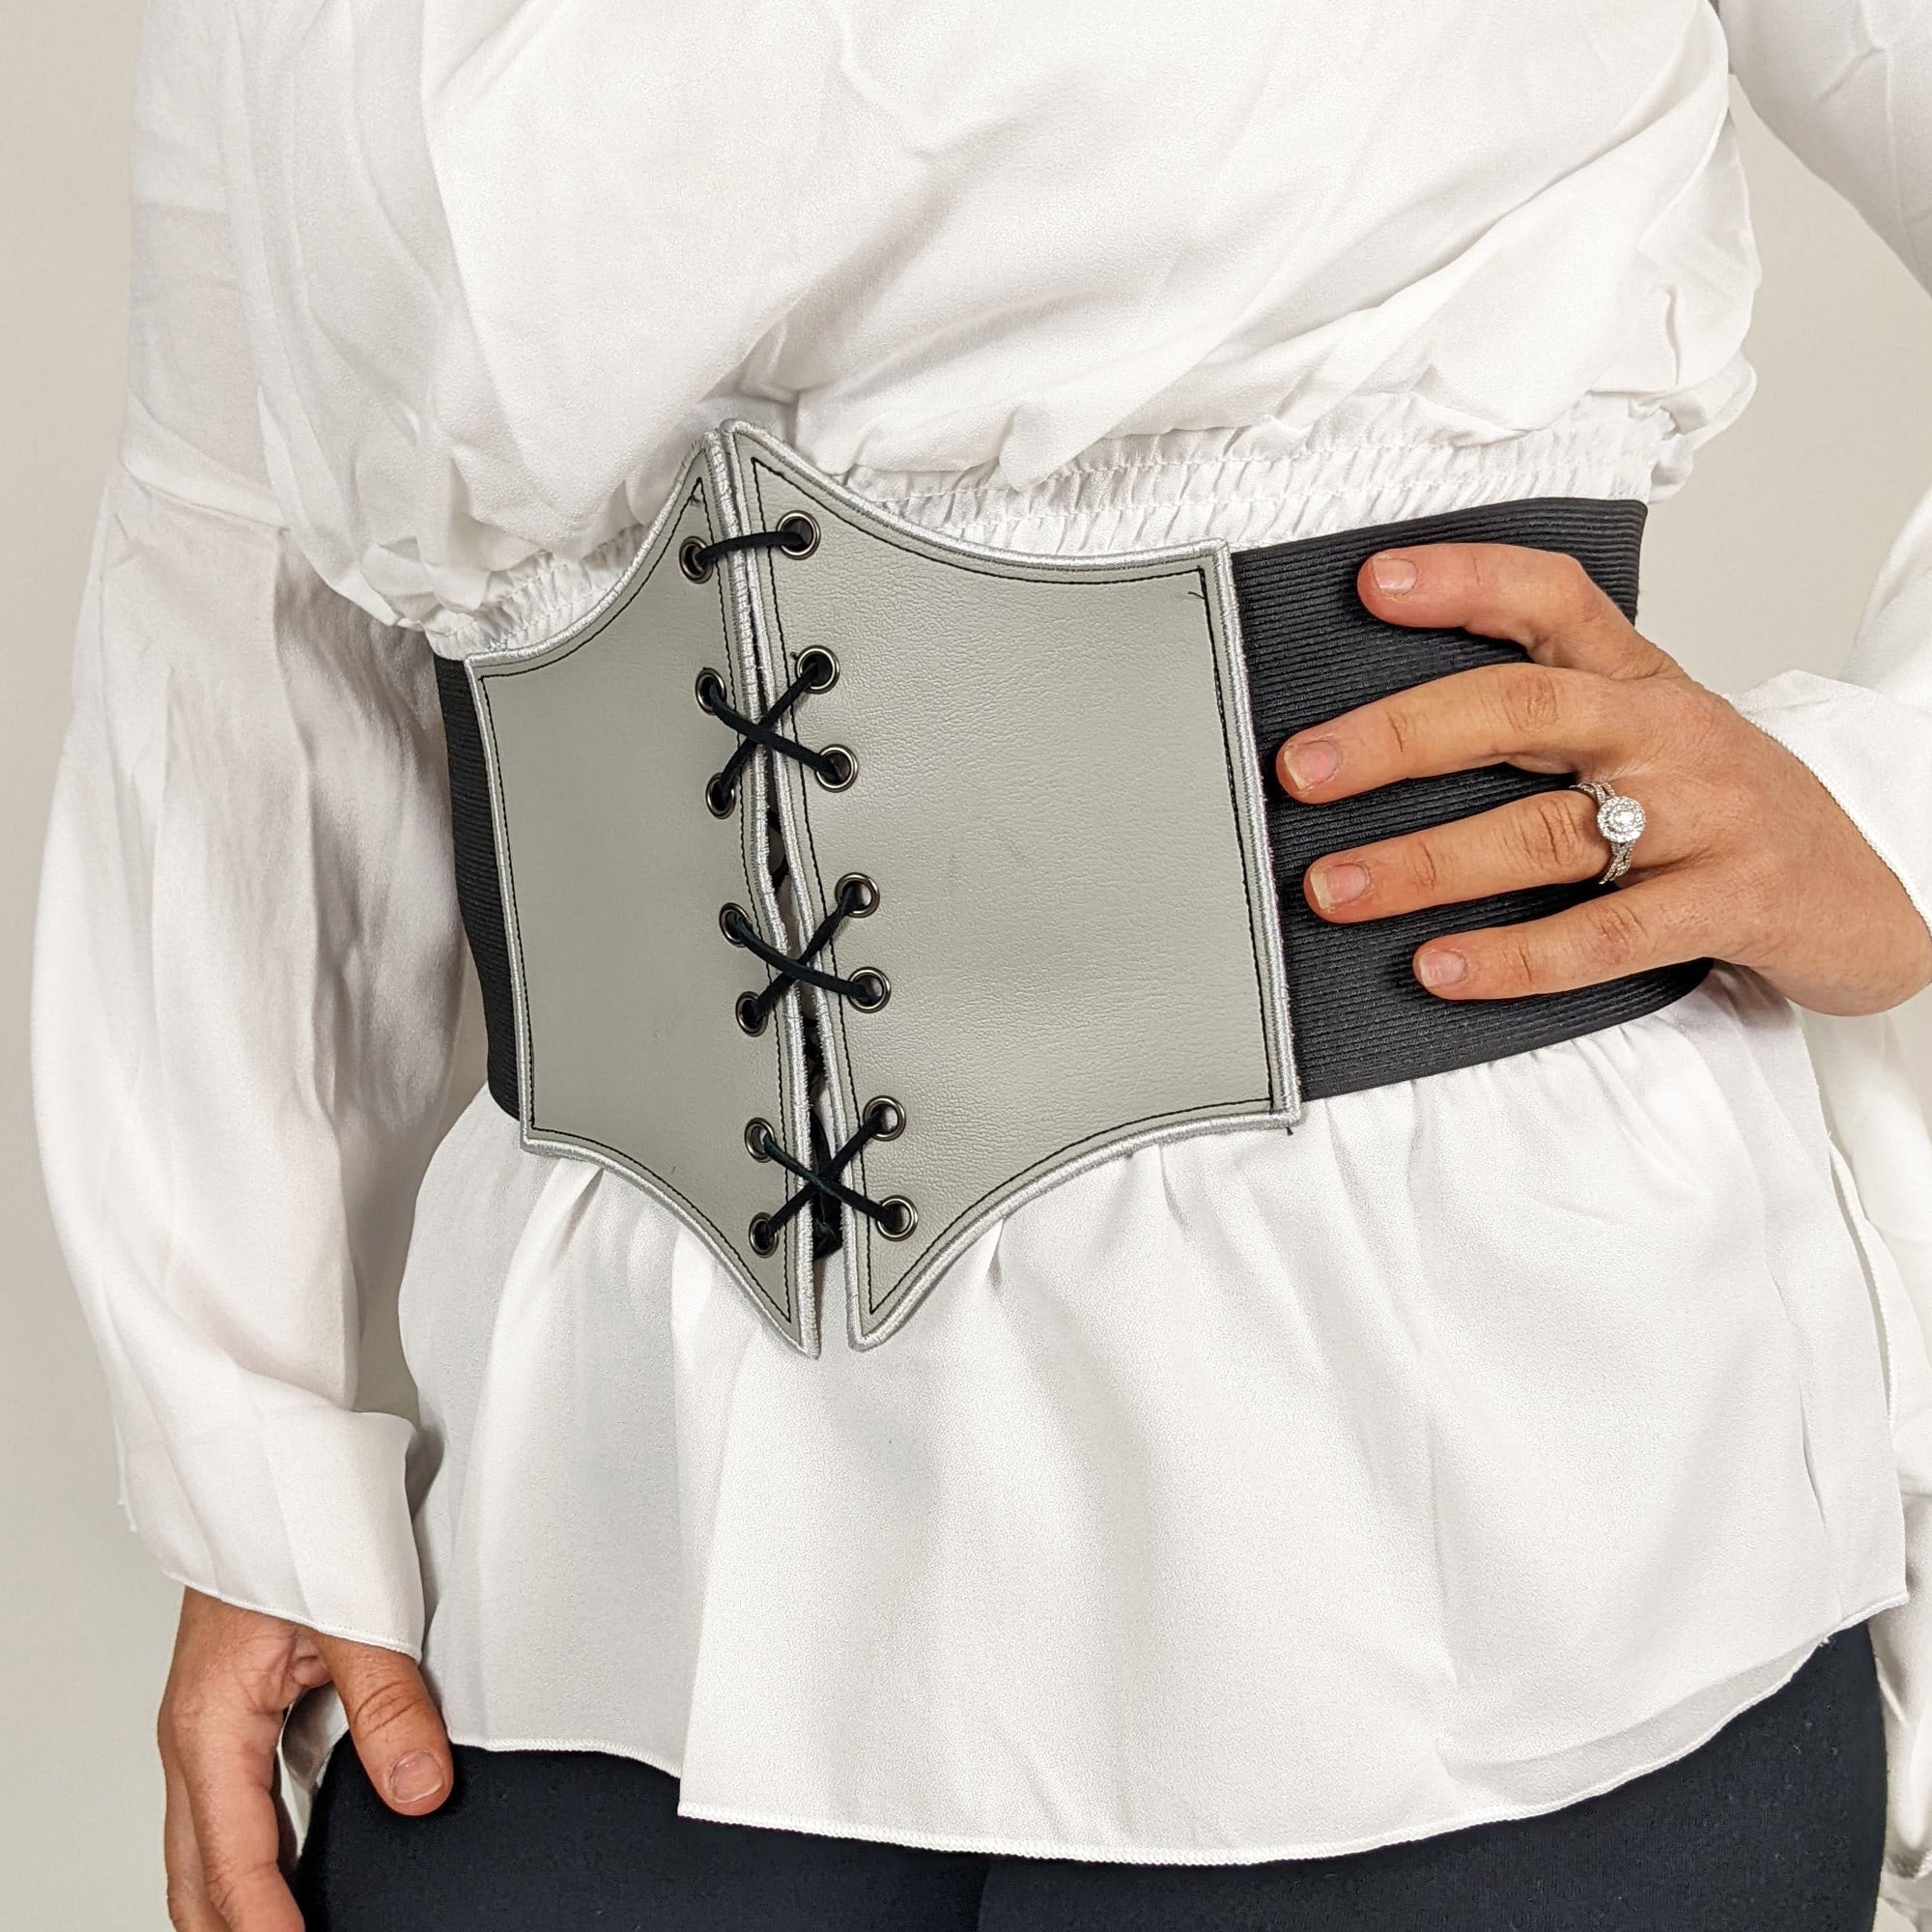 Medieval Leather Corset Belt, Renaissance Underbust Gothic Corset, Mini  High Waisted Corset Skirt